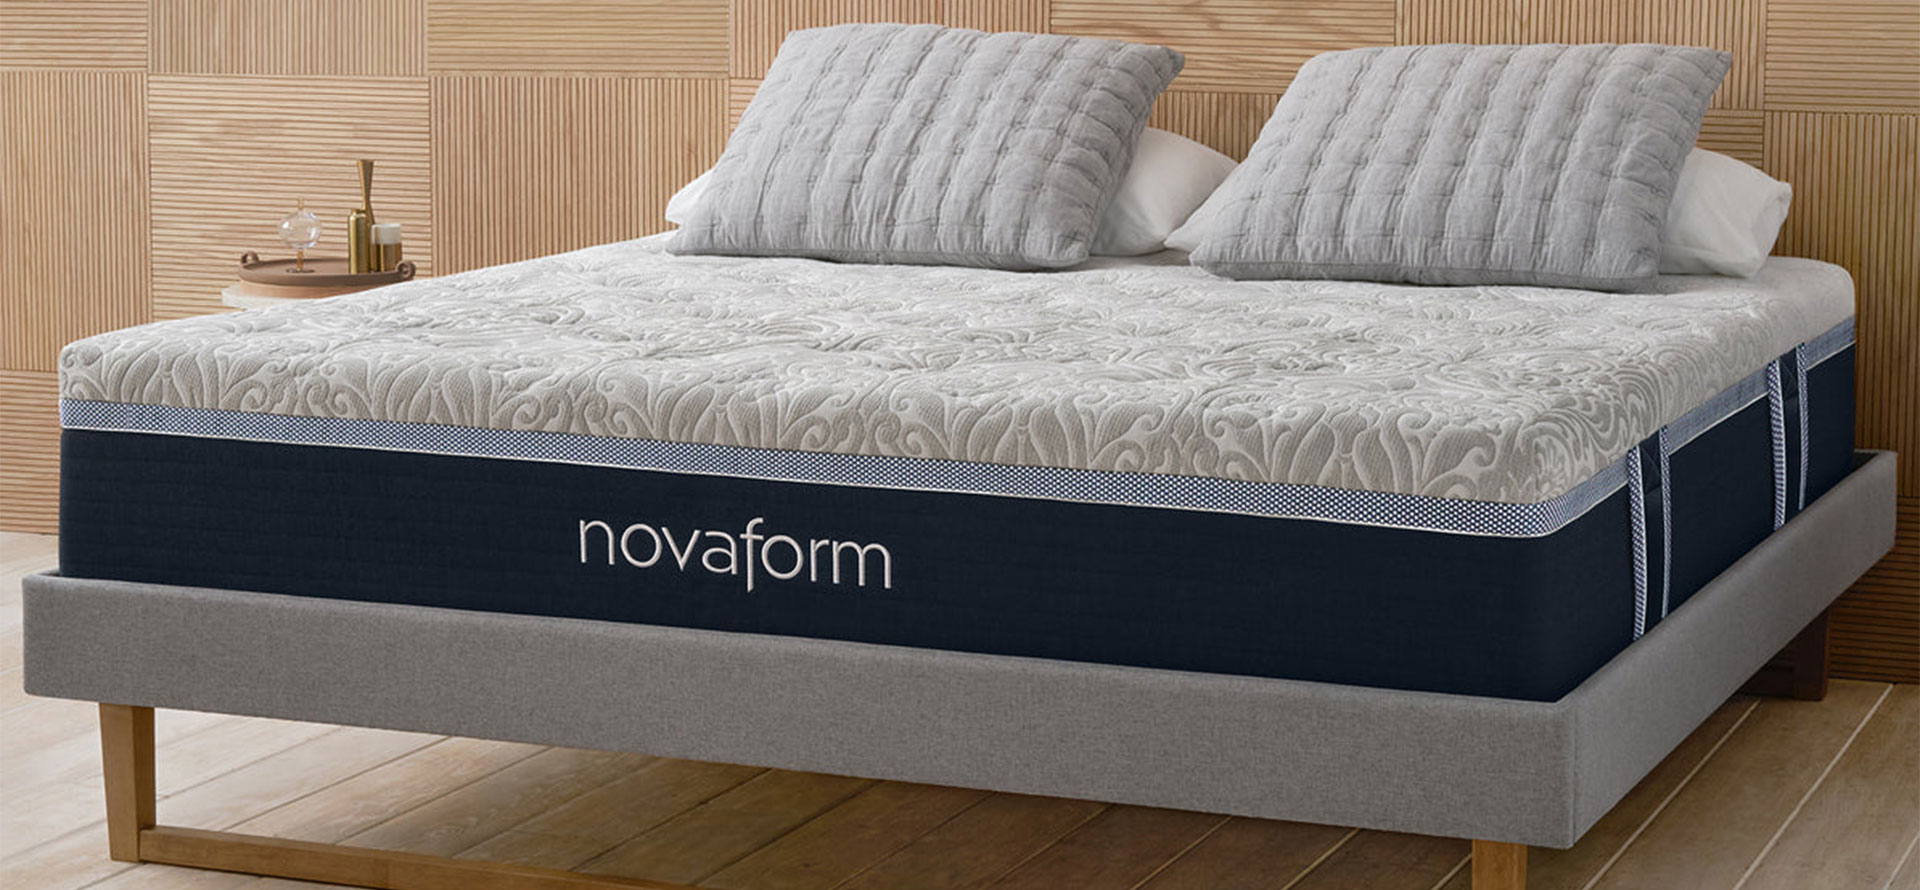 Novaform mattress.